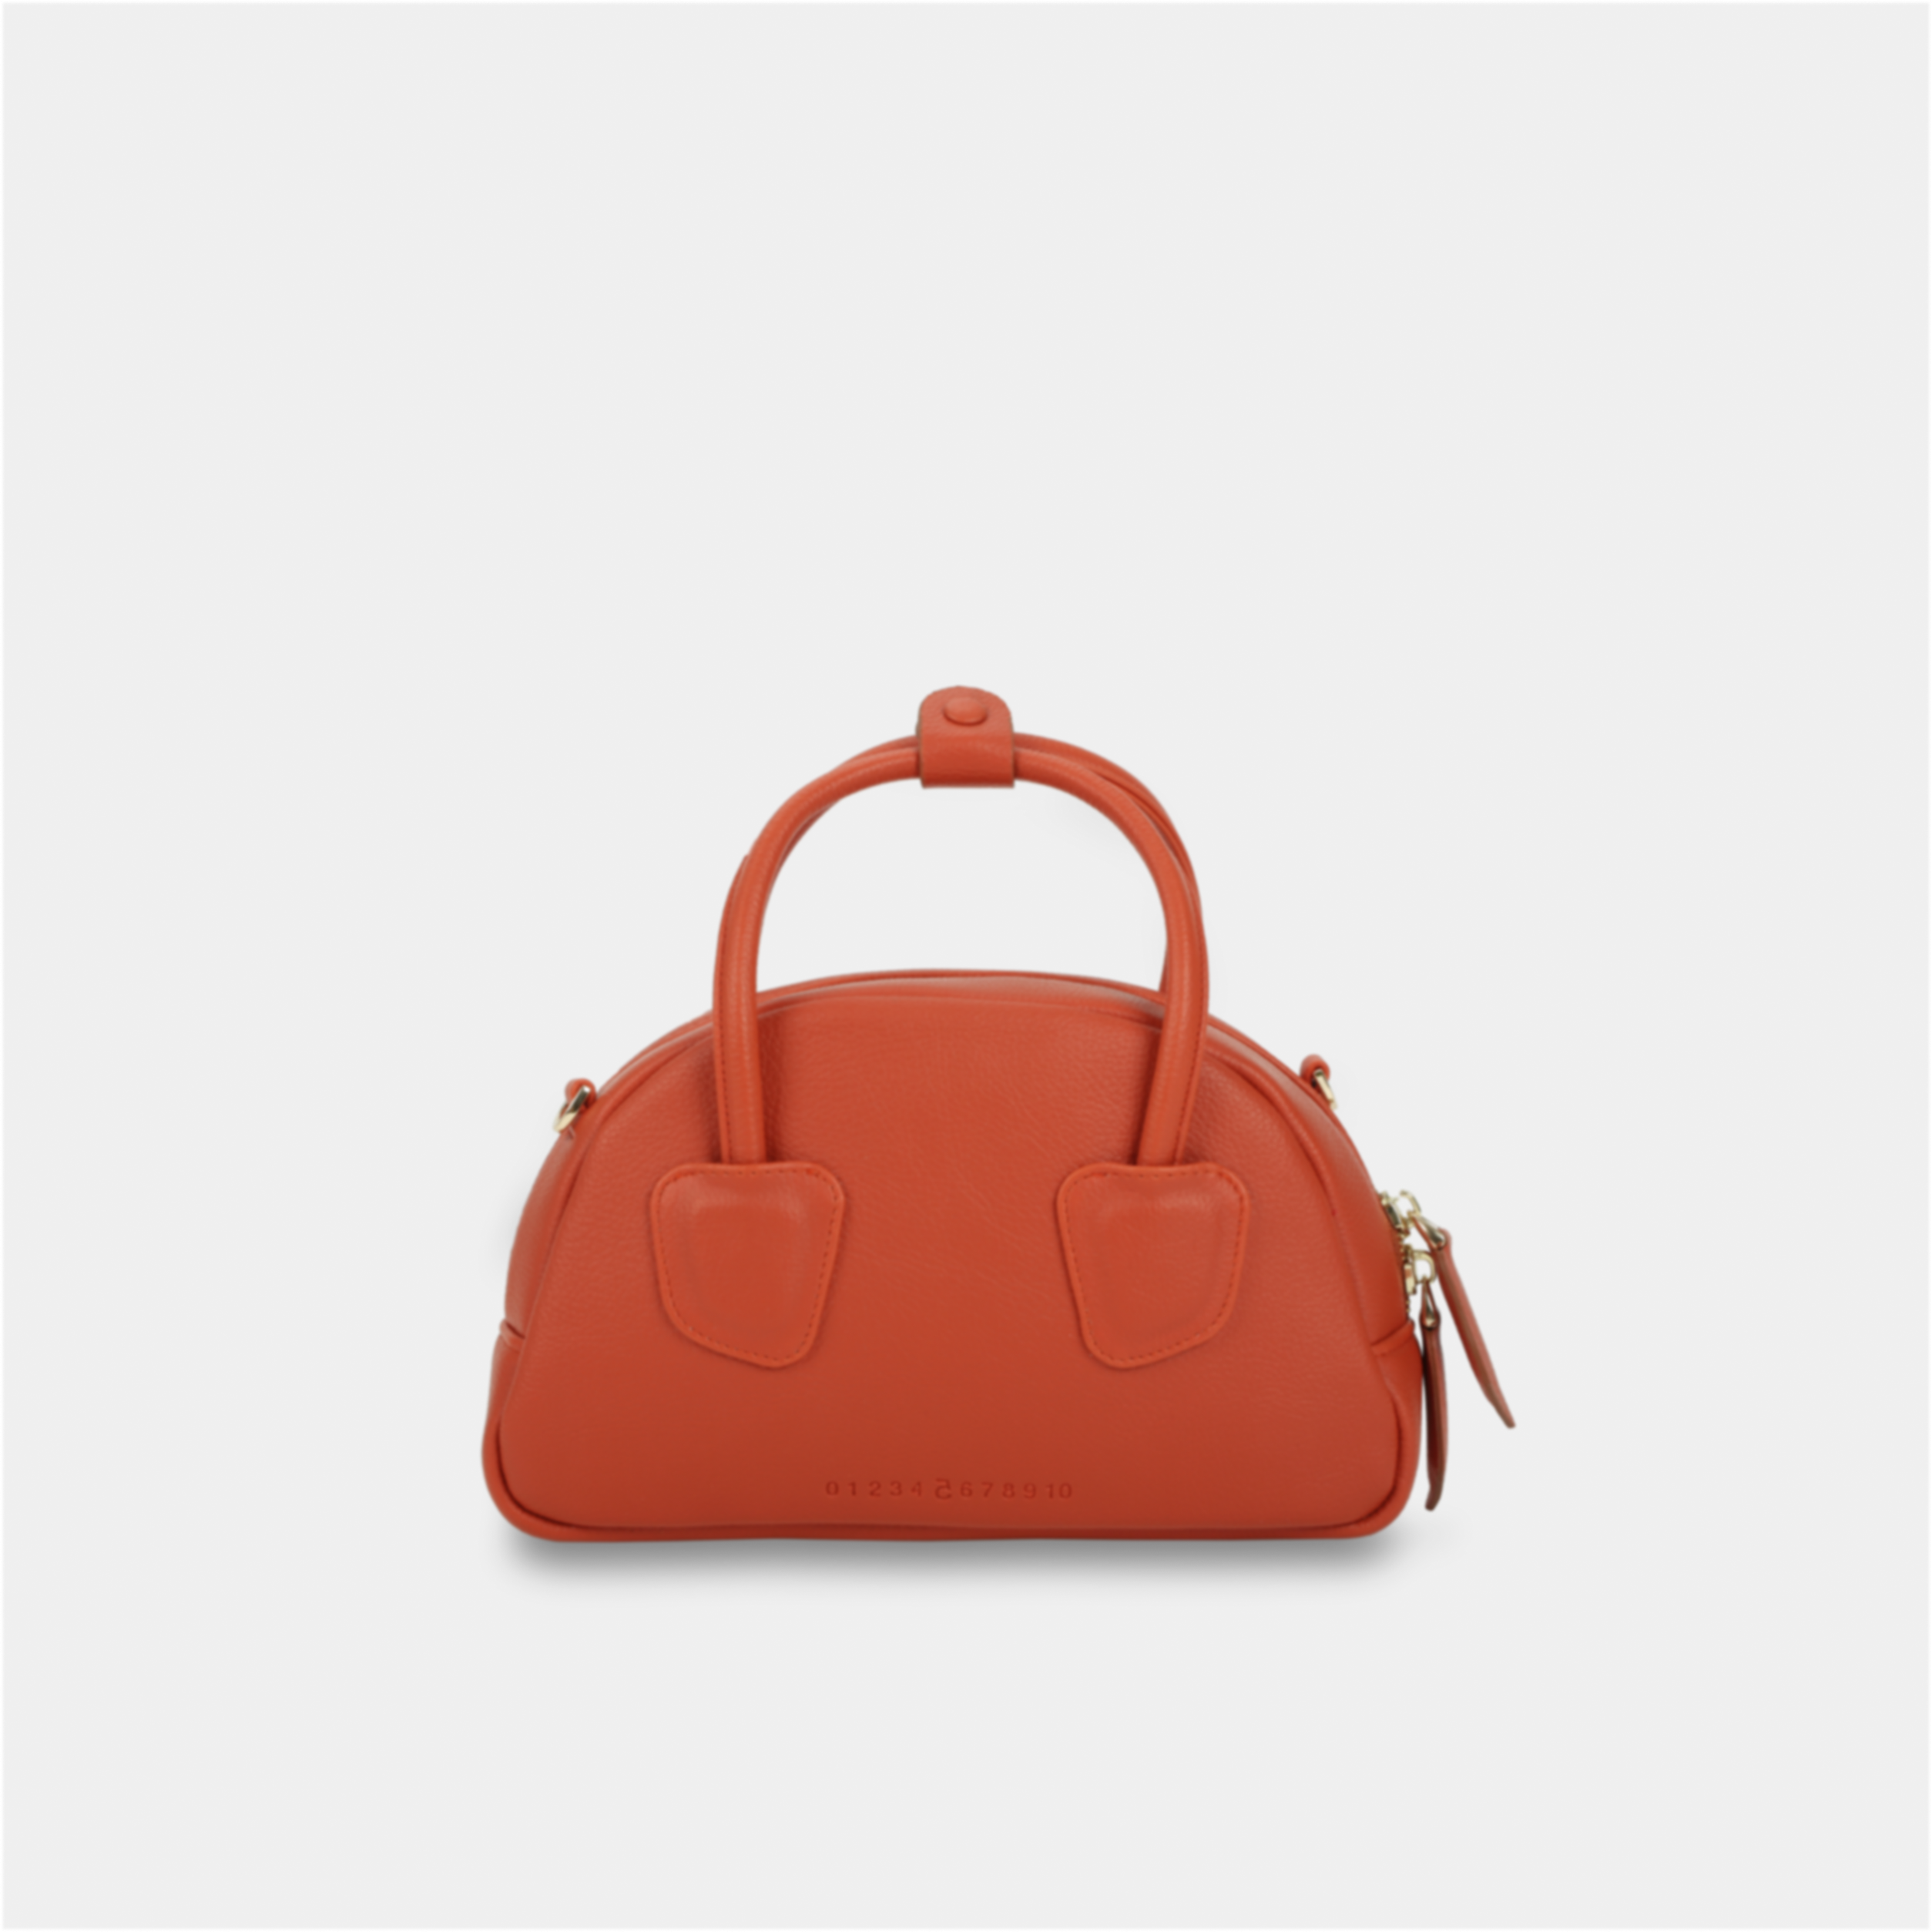 TACOS handbag red orange big size (M)